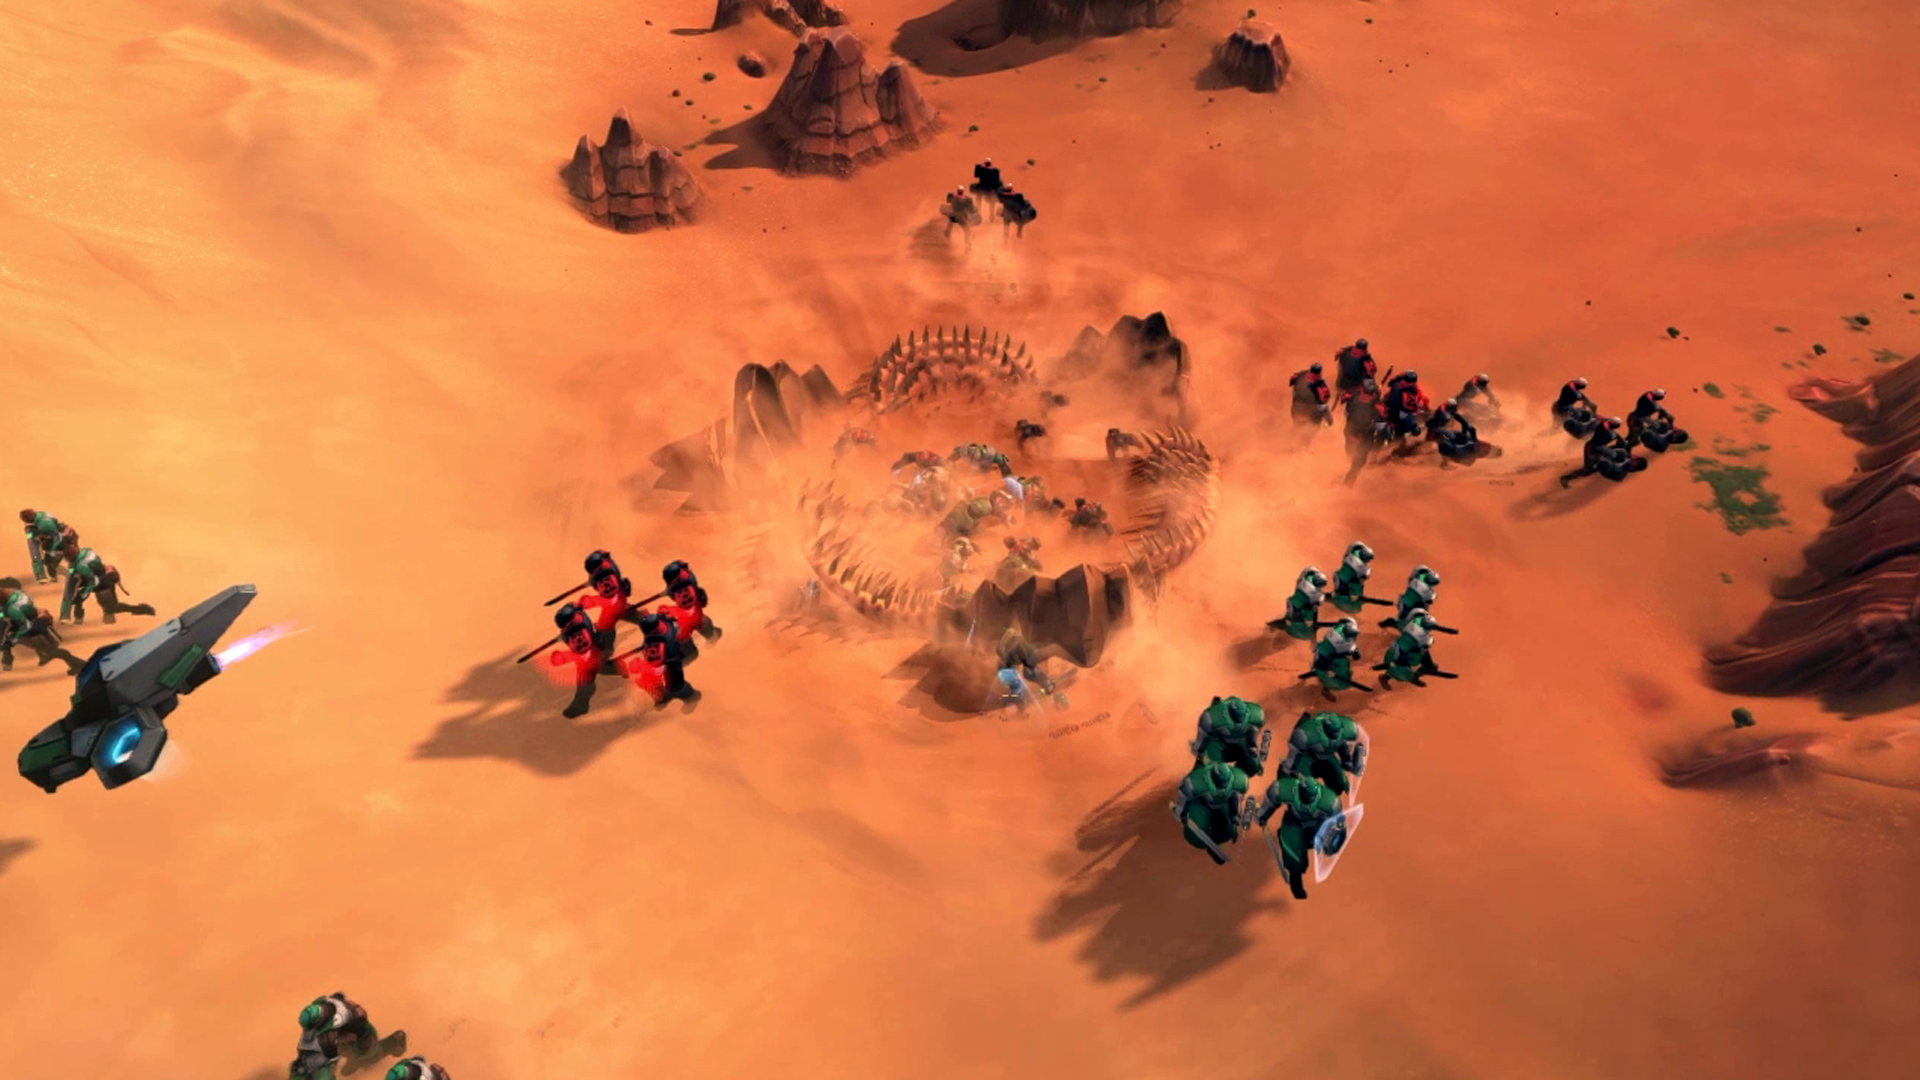 Dune: Spice Wars 4X gameplay reveals its first sandworm attack